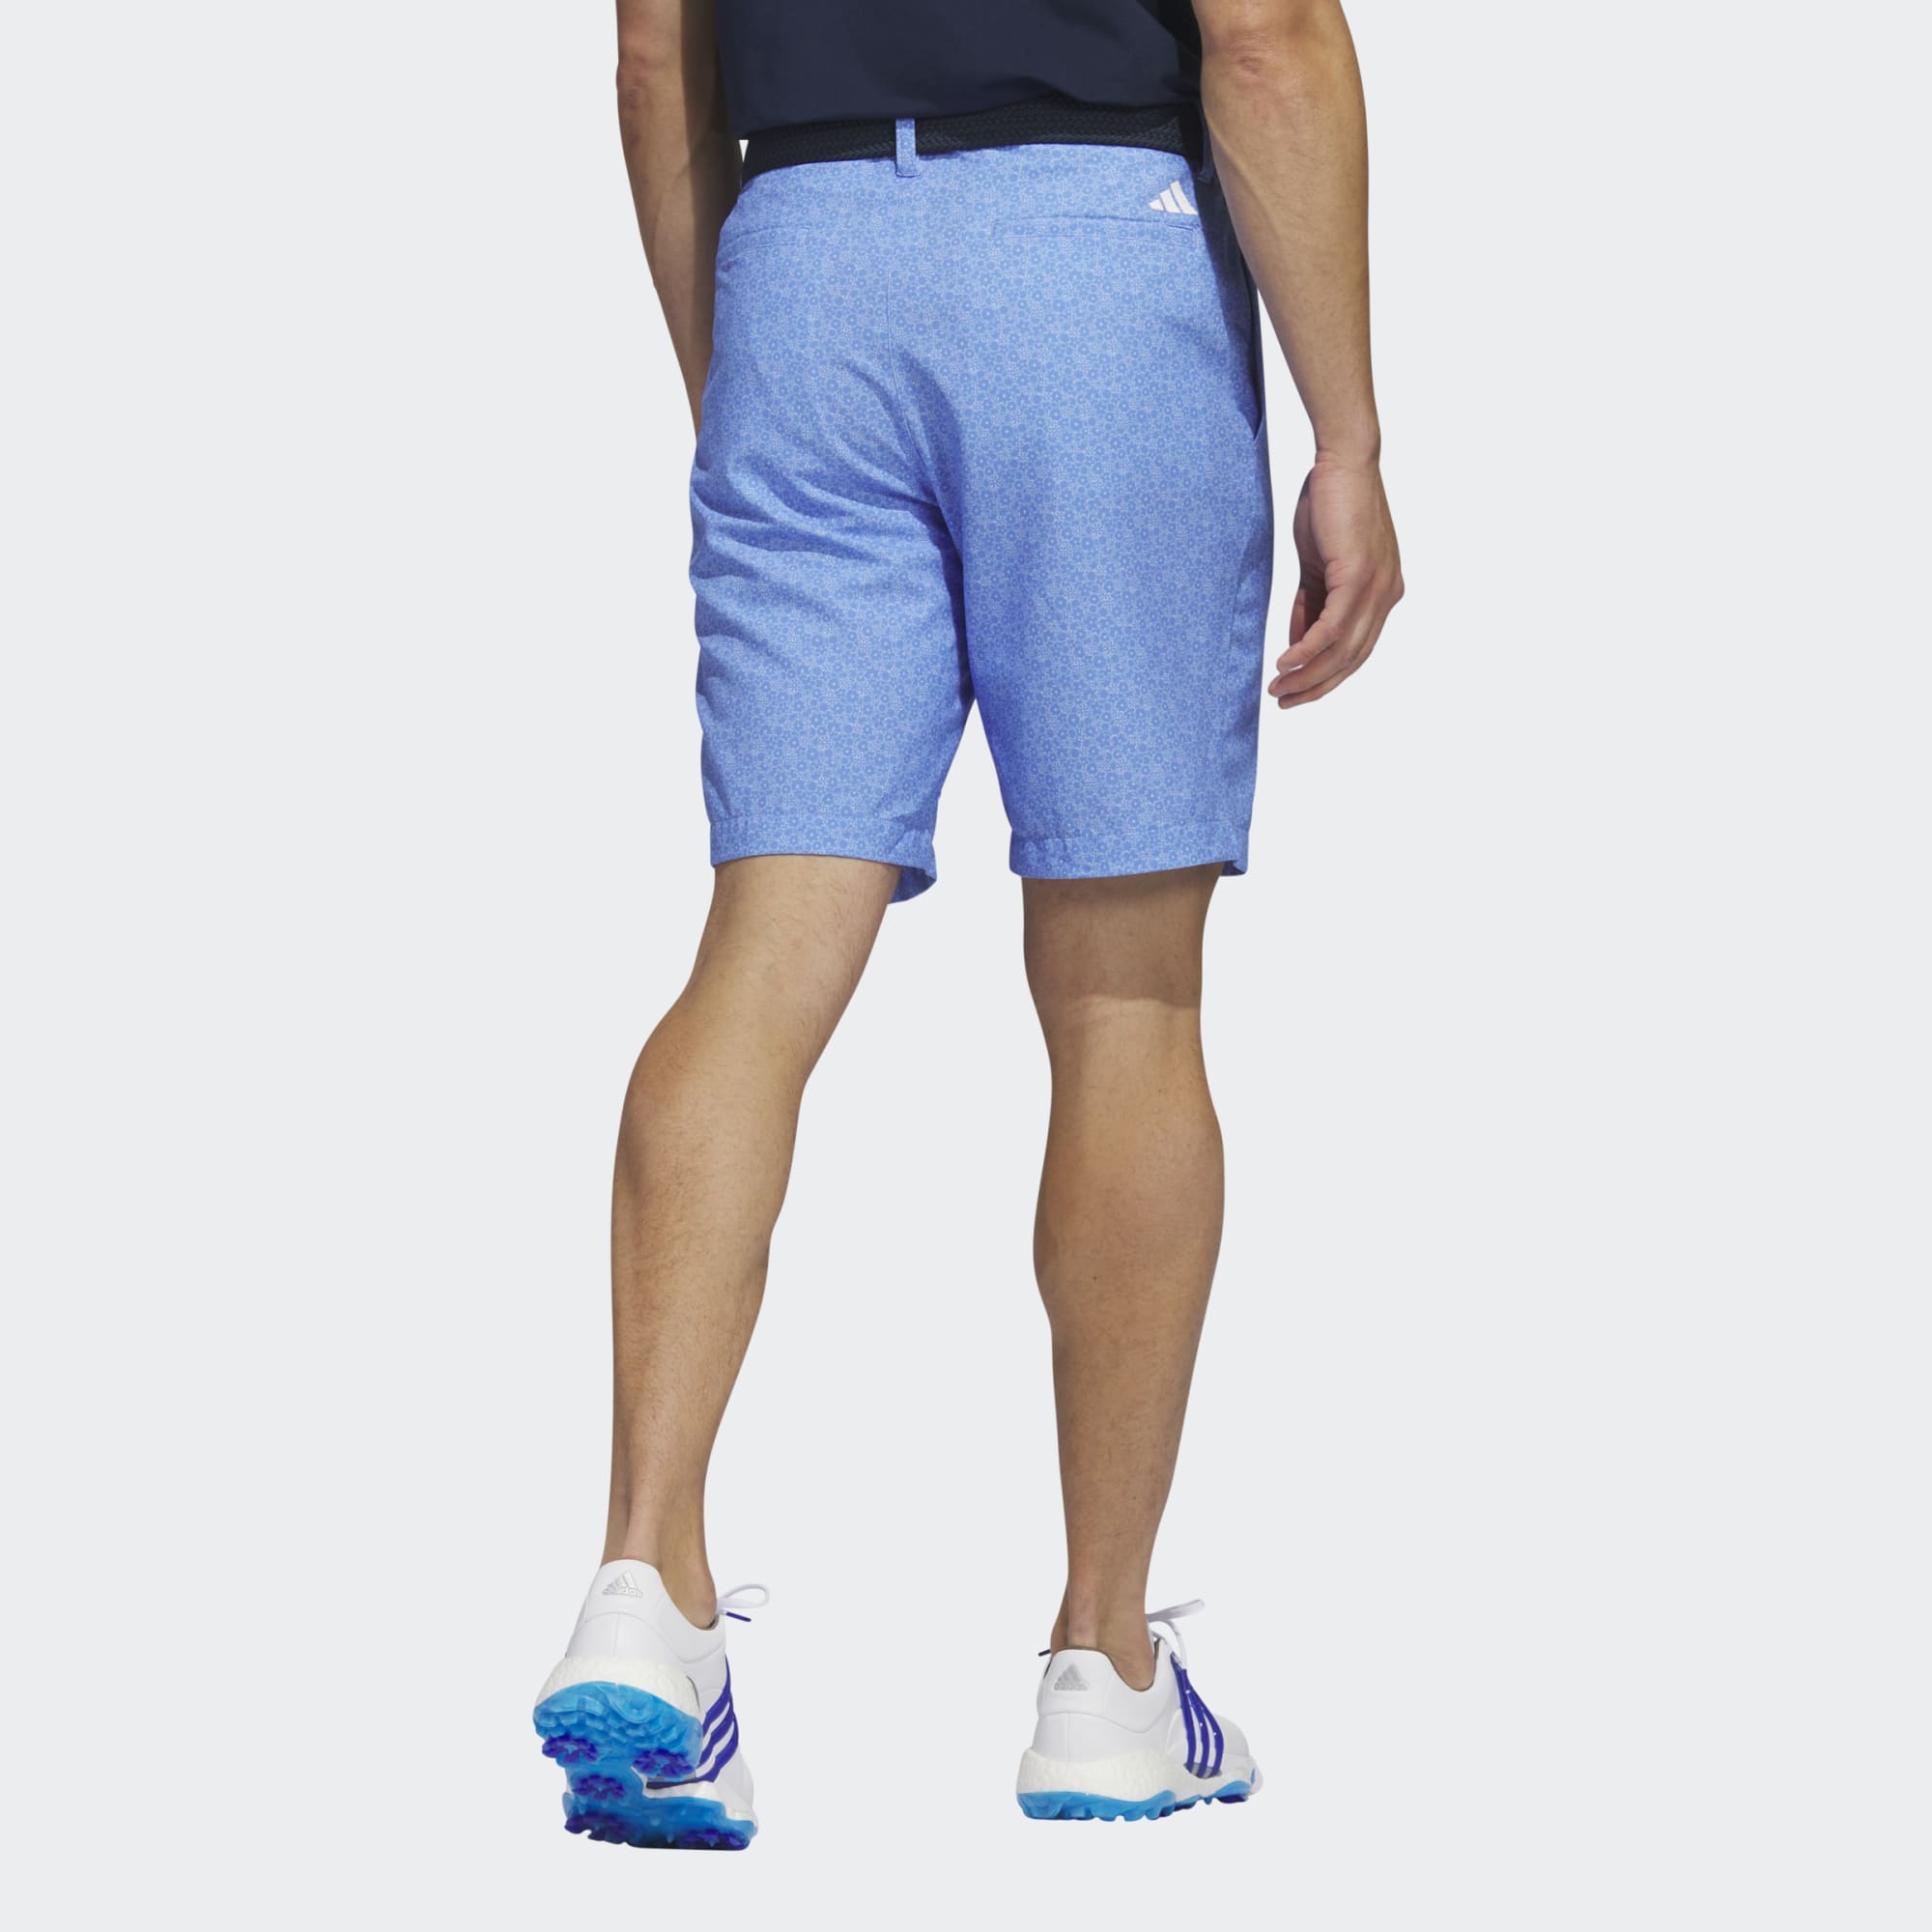 Adidas Men's Golf Short - Ultimate Print